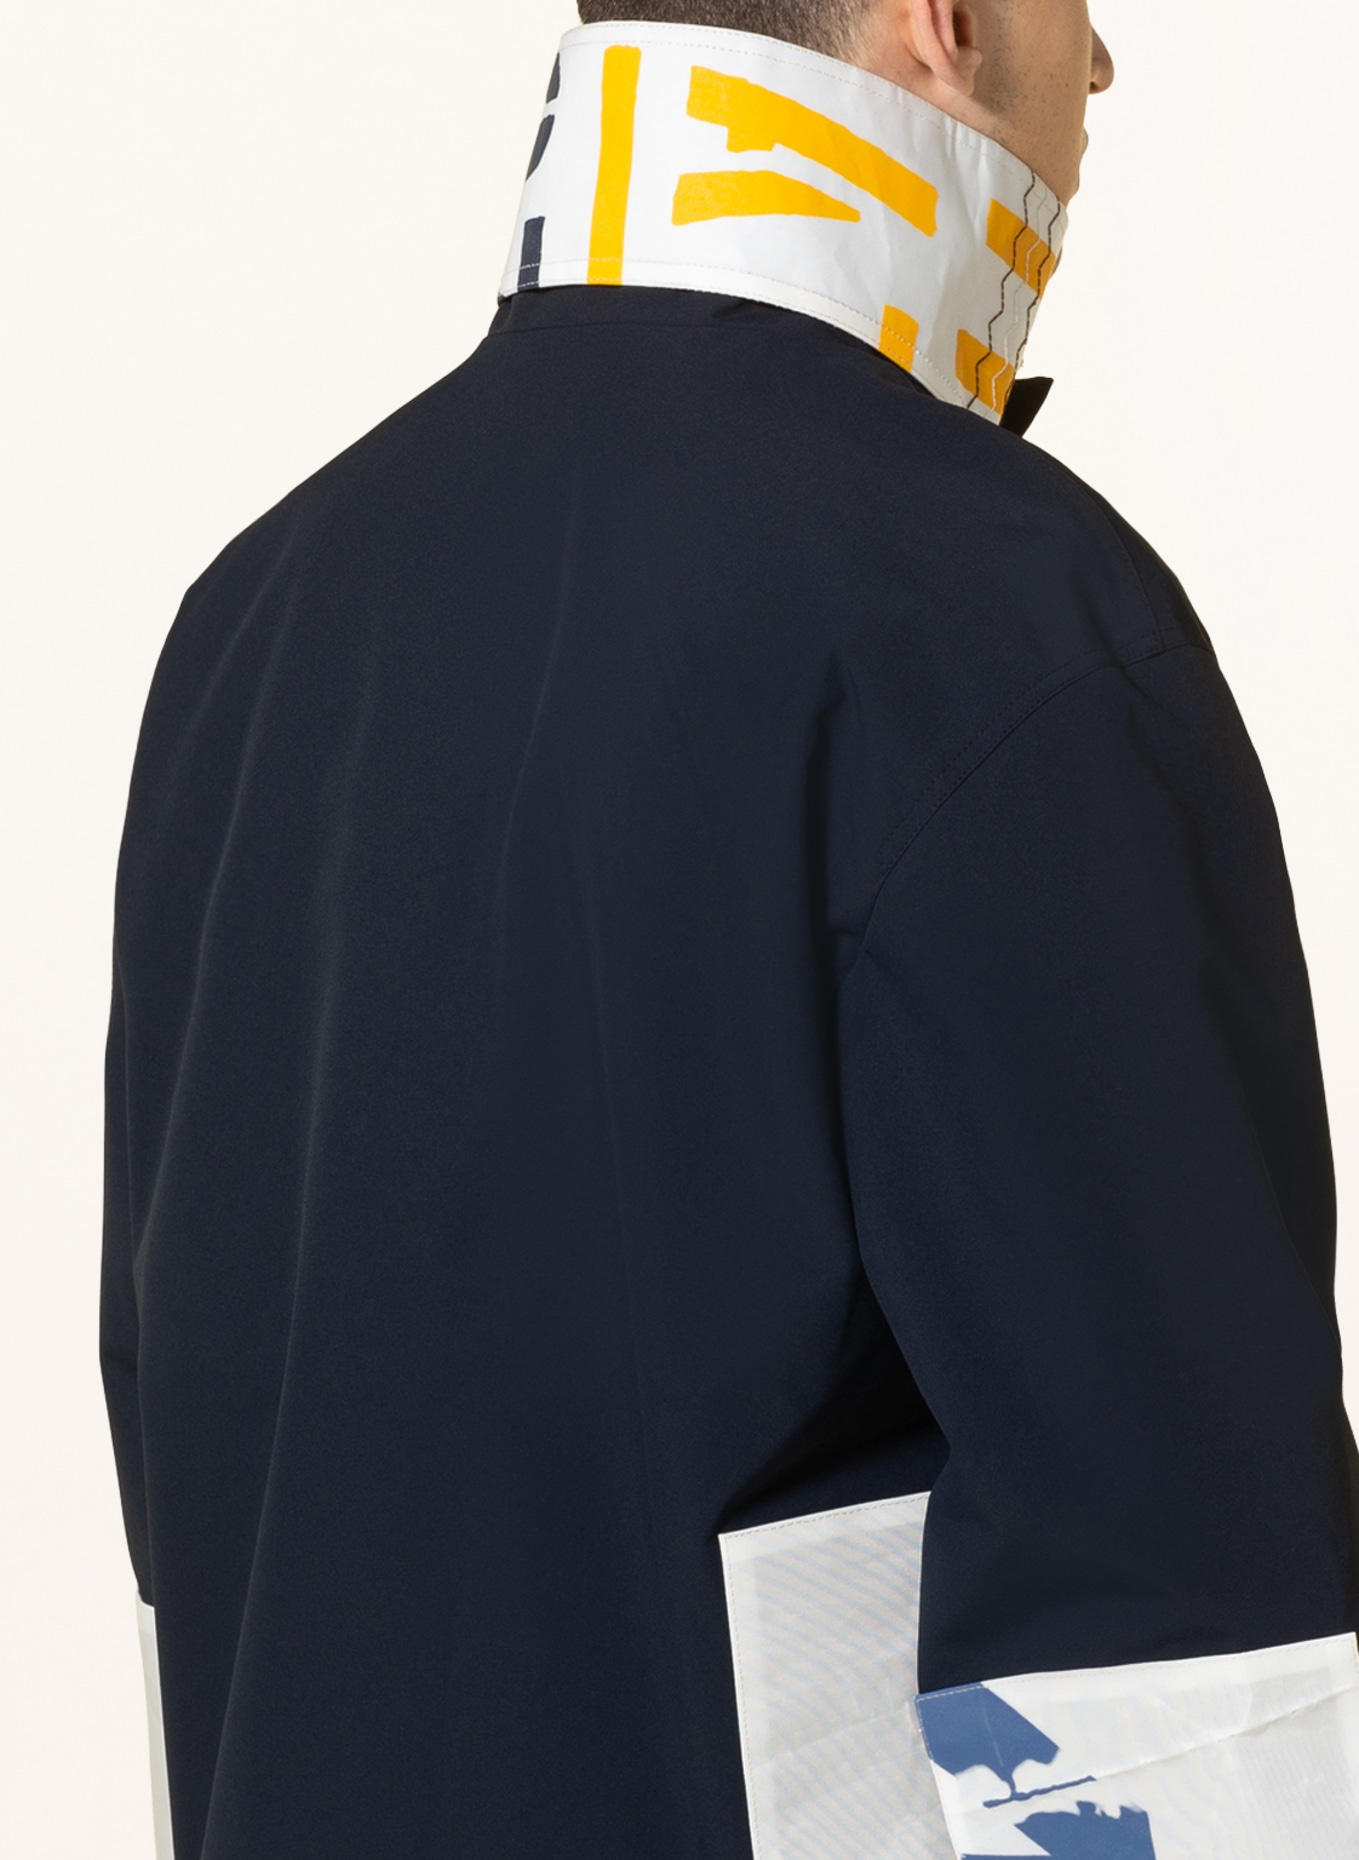 PAUL & SHARK Jacke mit abnehmbarer Kapuze, Farbe: DUNKELBLAU/ WEISS/ DUNKELGELB (Bild 6)